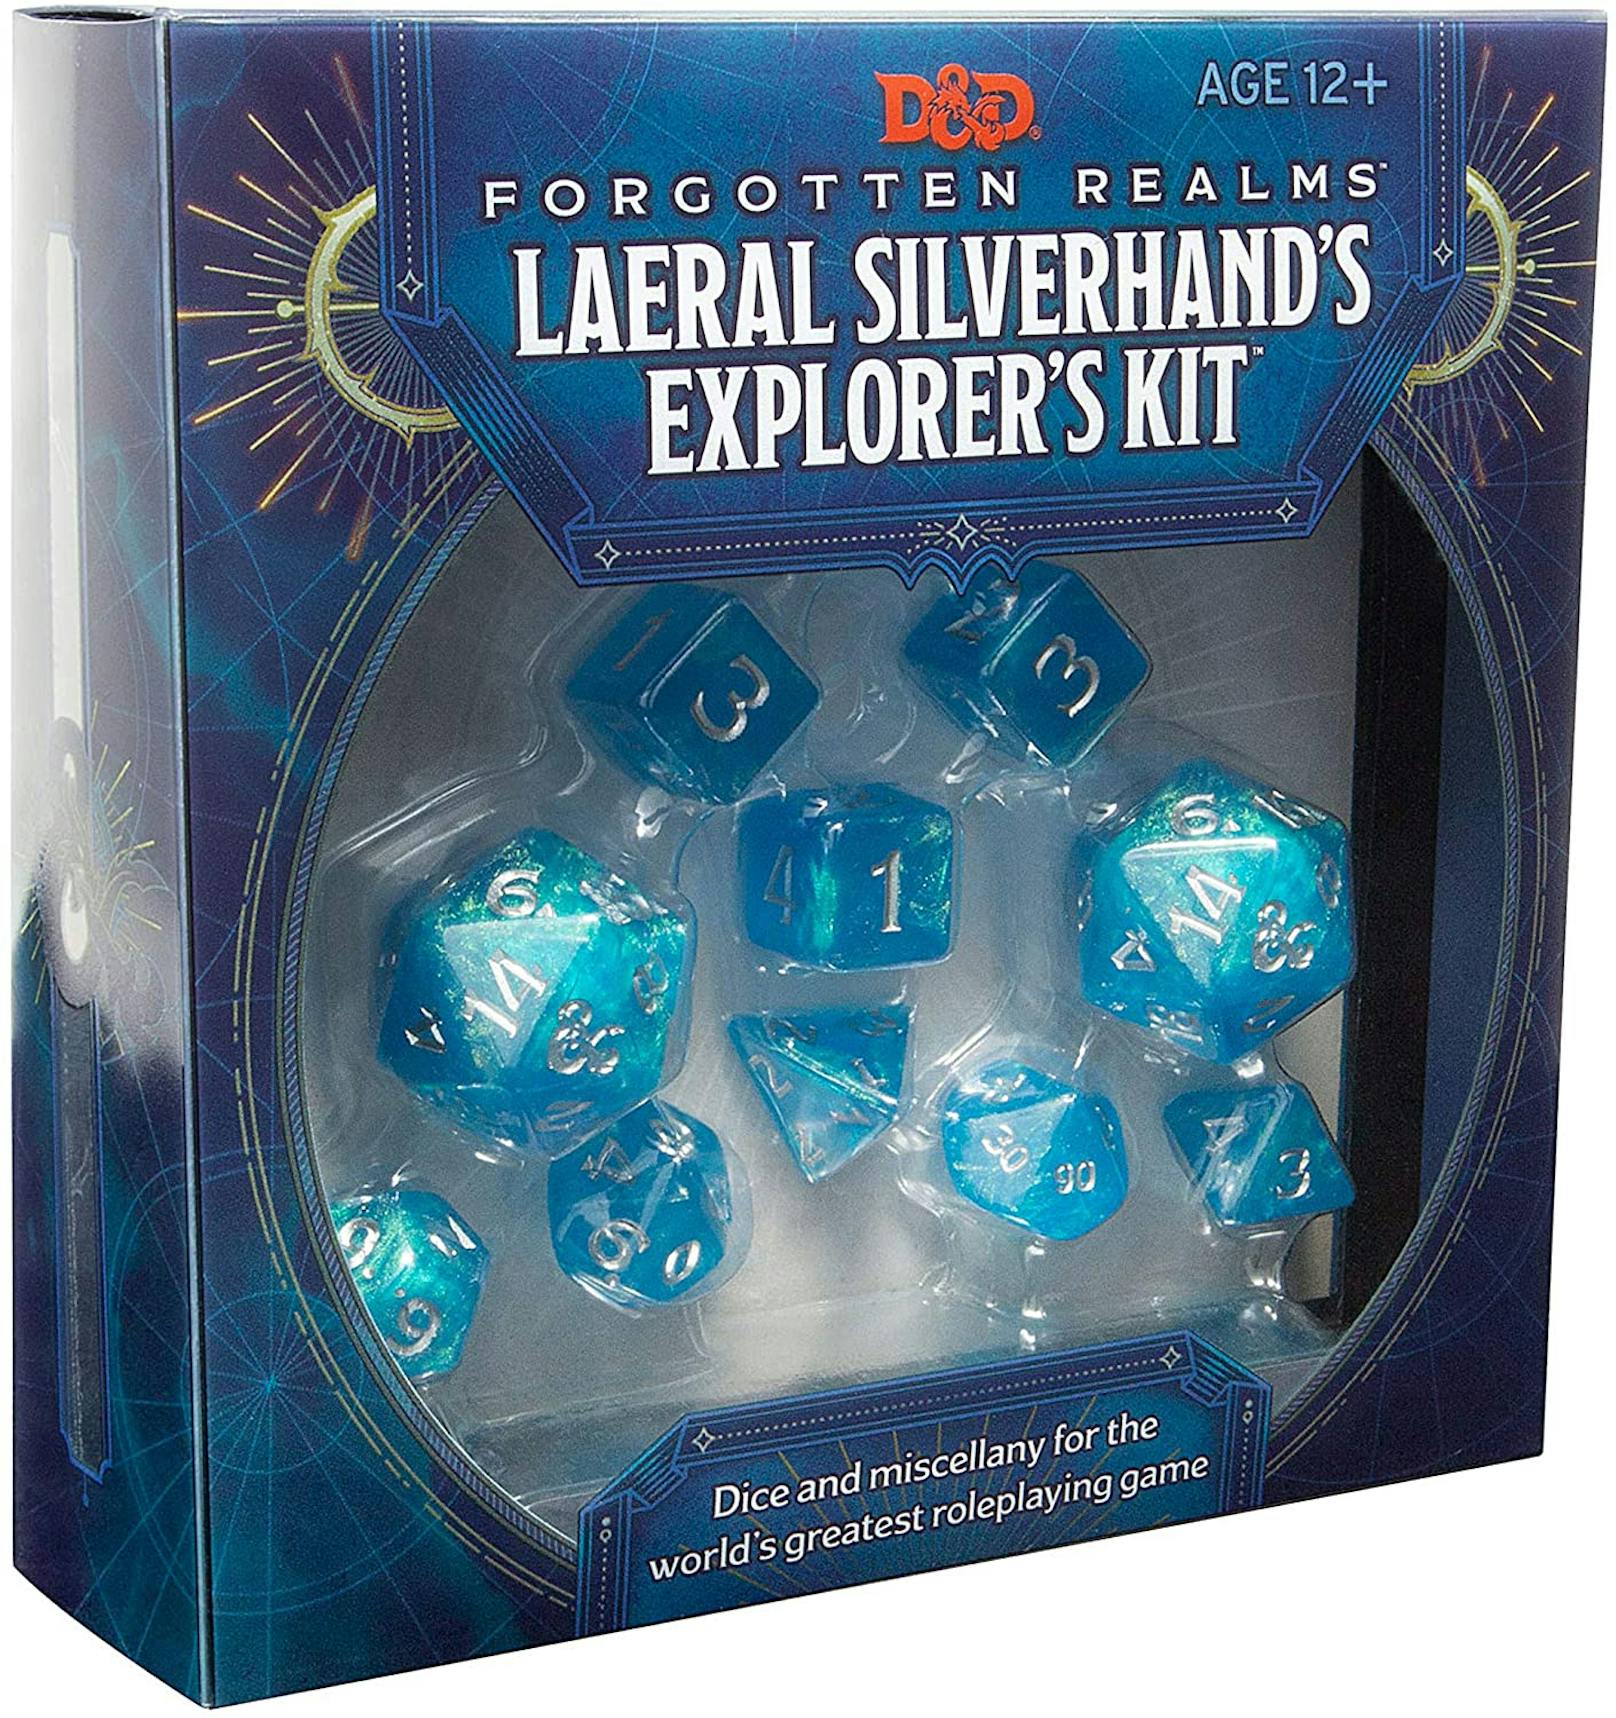 "Laeral Silverhand's Explorer's Kit" enthält elf Würfel.